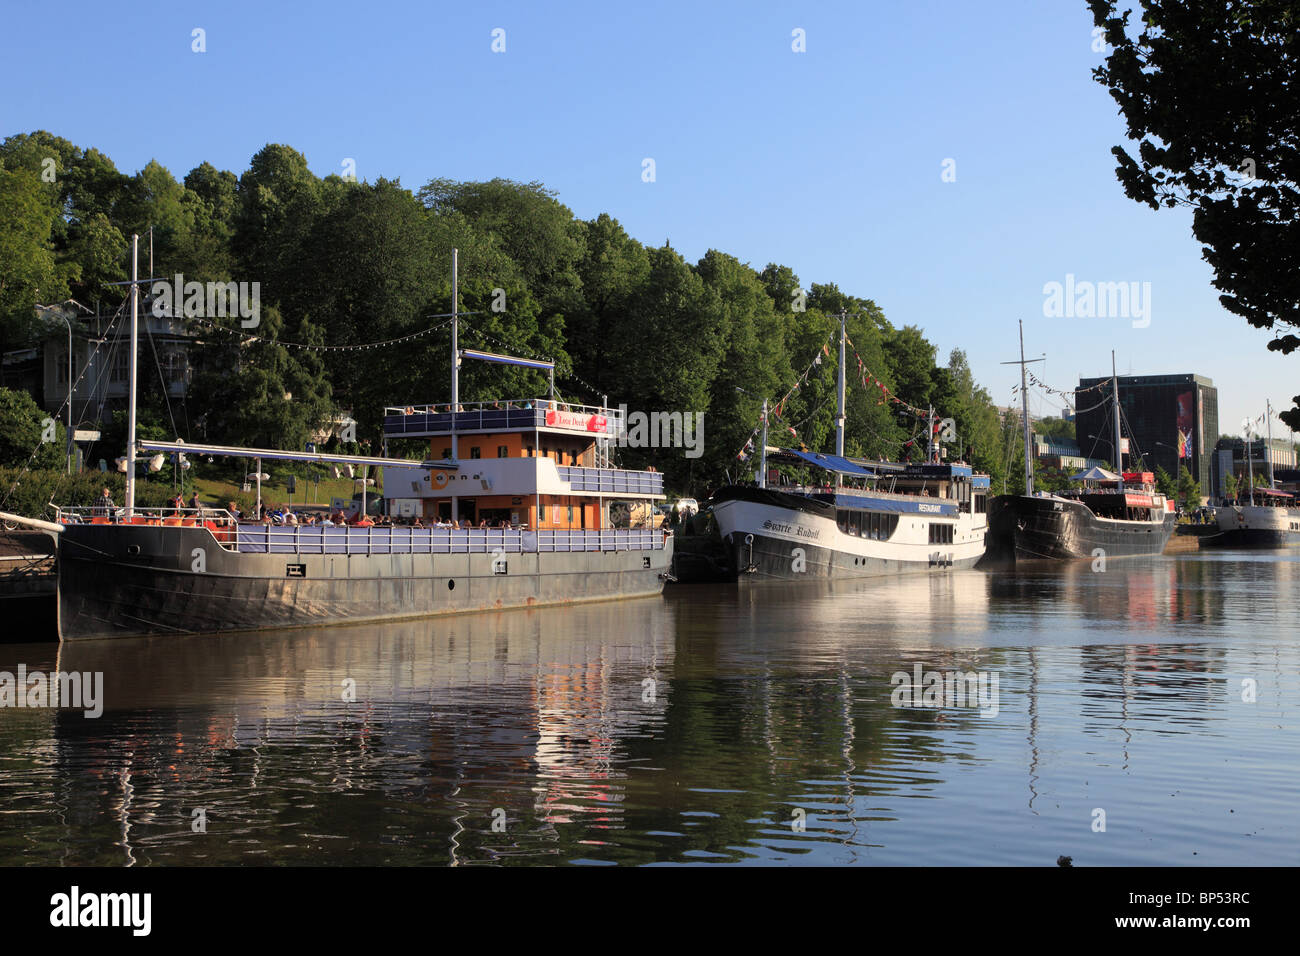 Finland, Turku, boats on Aurajoki River, Stock Photo